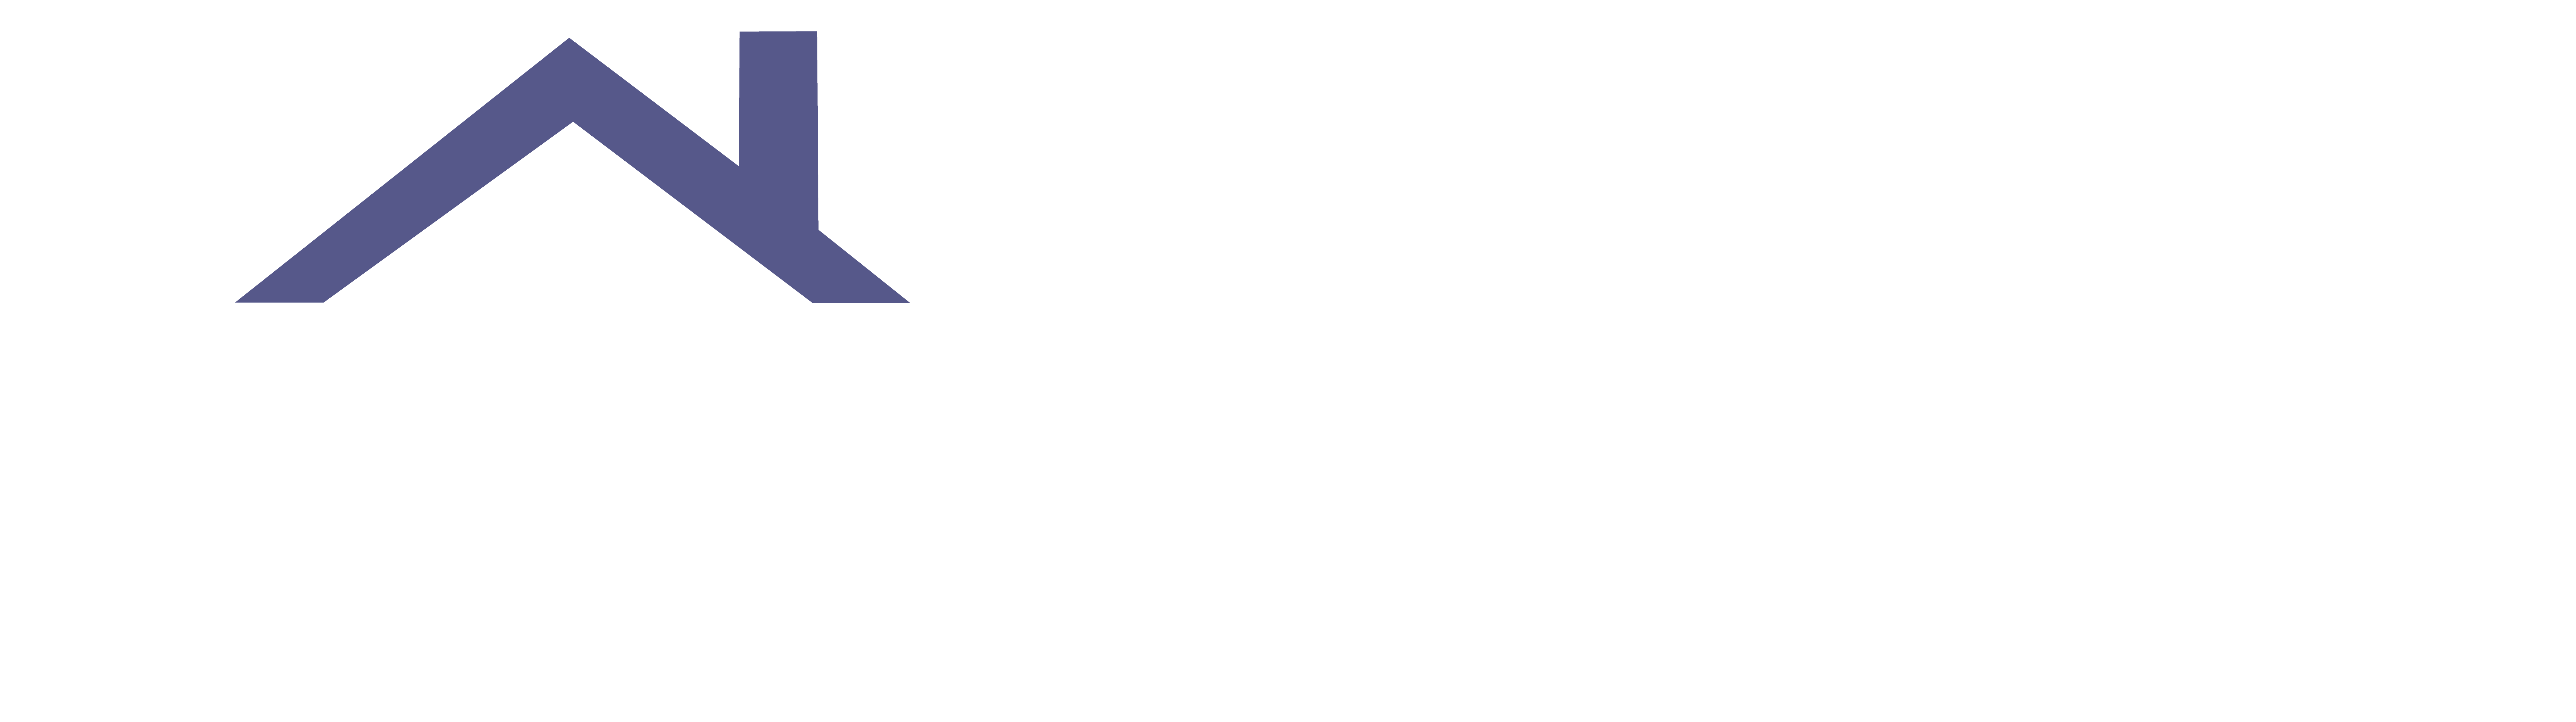 Logo_SolIDid_Paragon Connect_Purple-Wt-Text